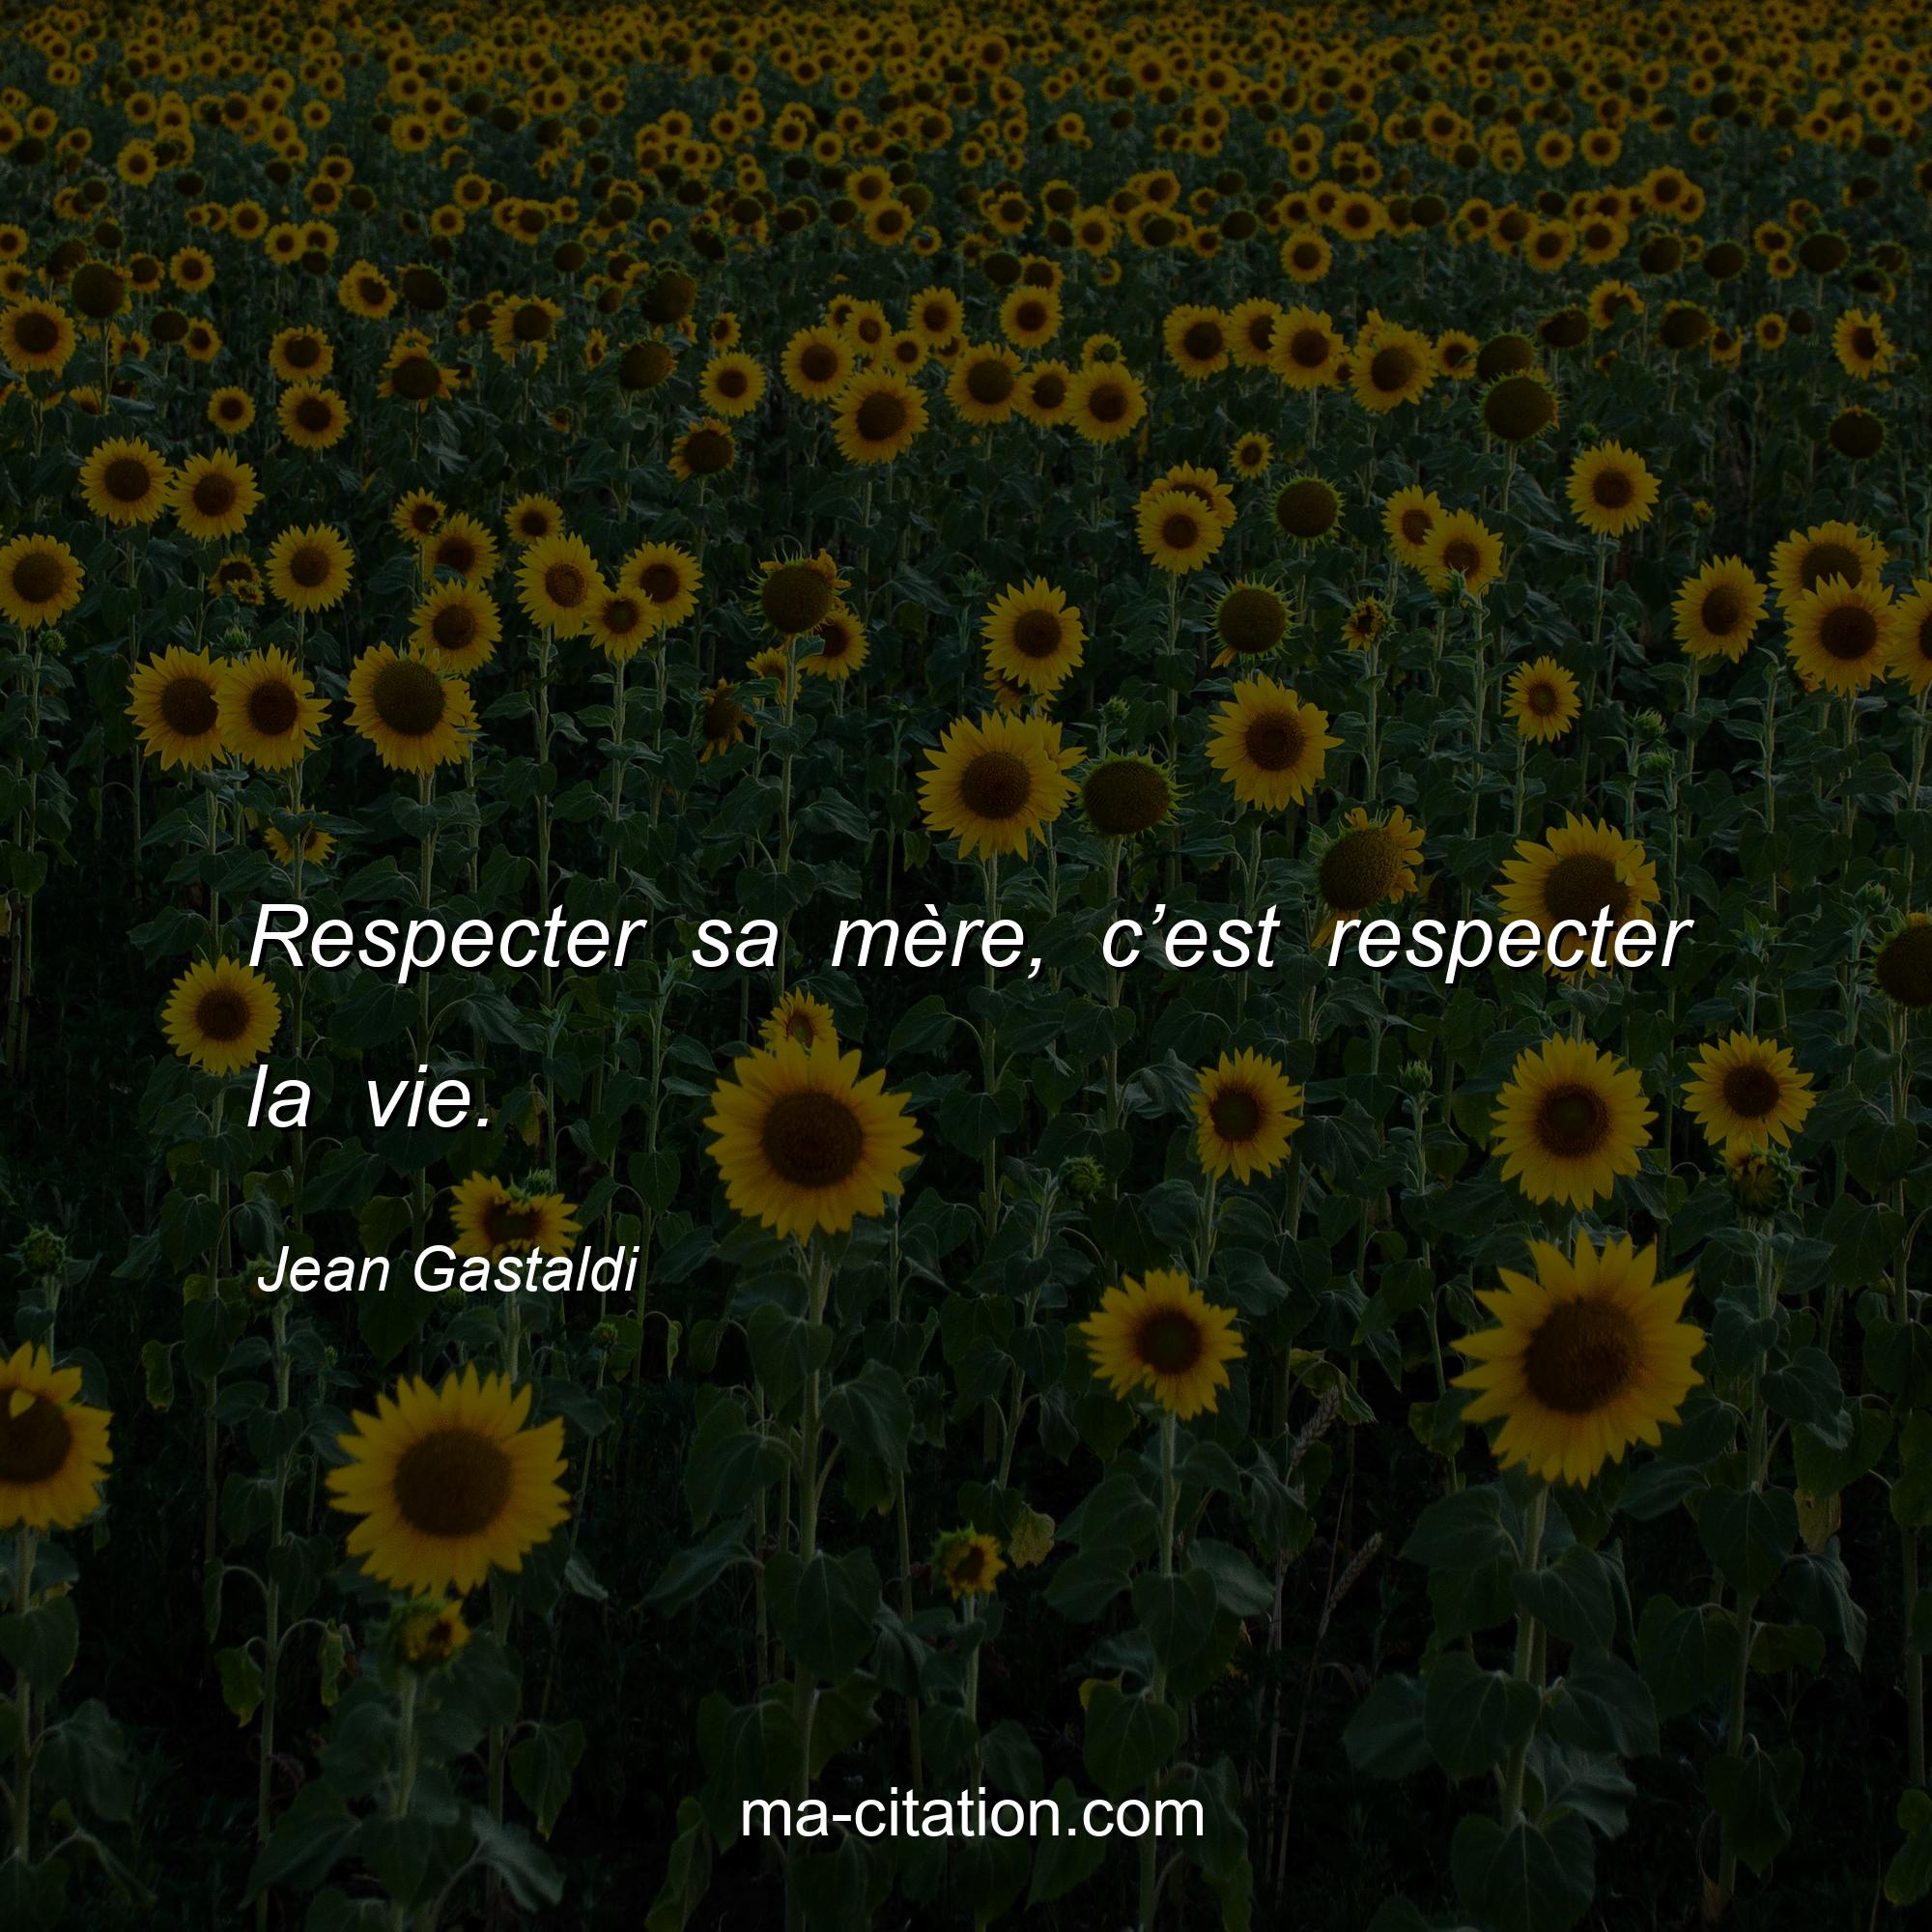 Jean Gastaldi : Respecter sa mère, c’est respecter la vie.